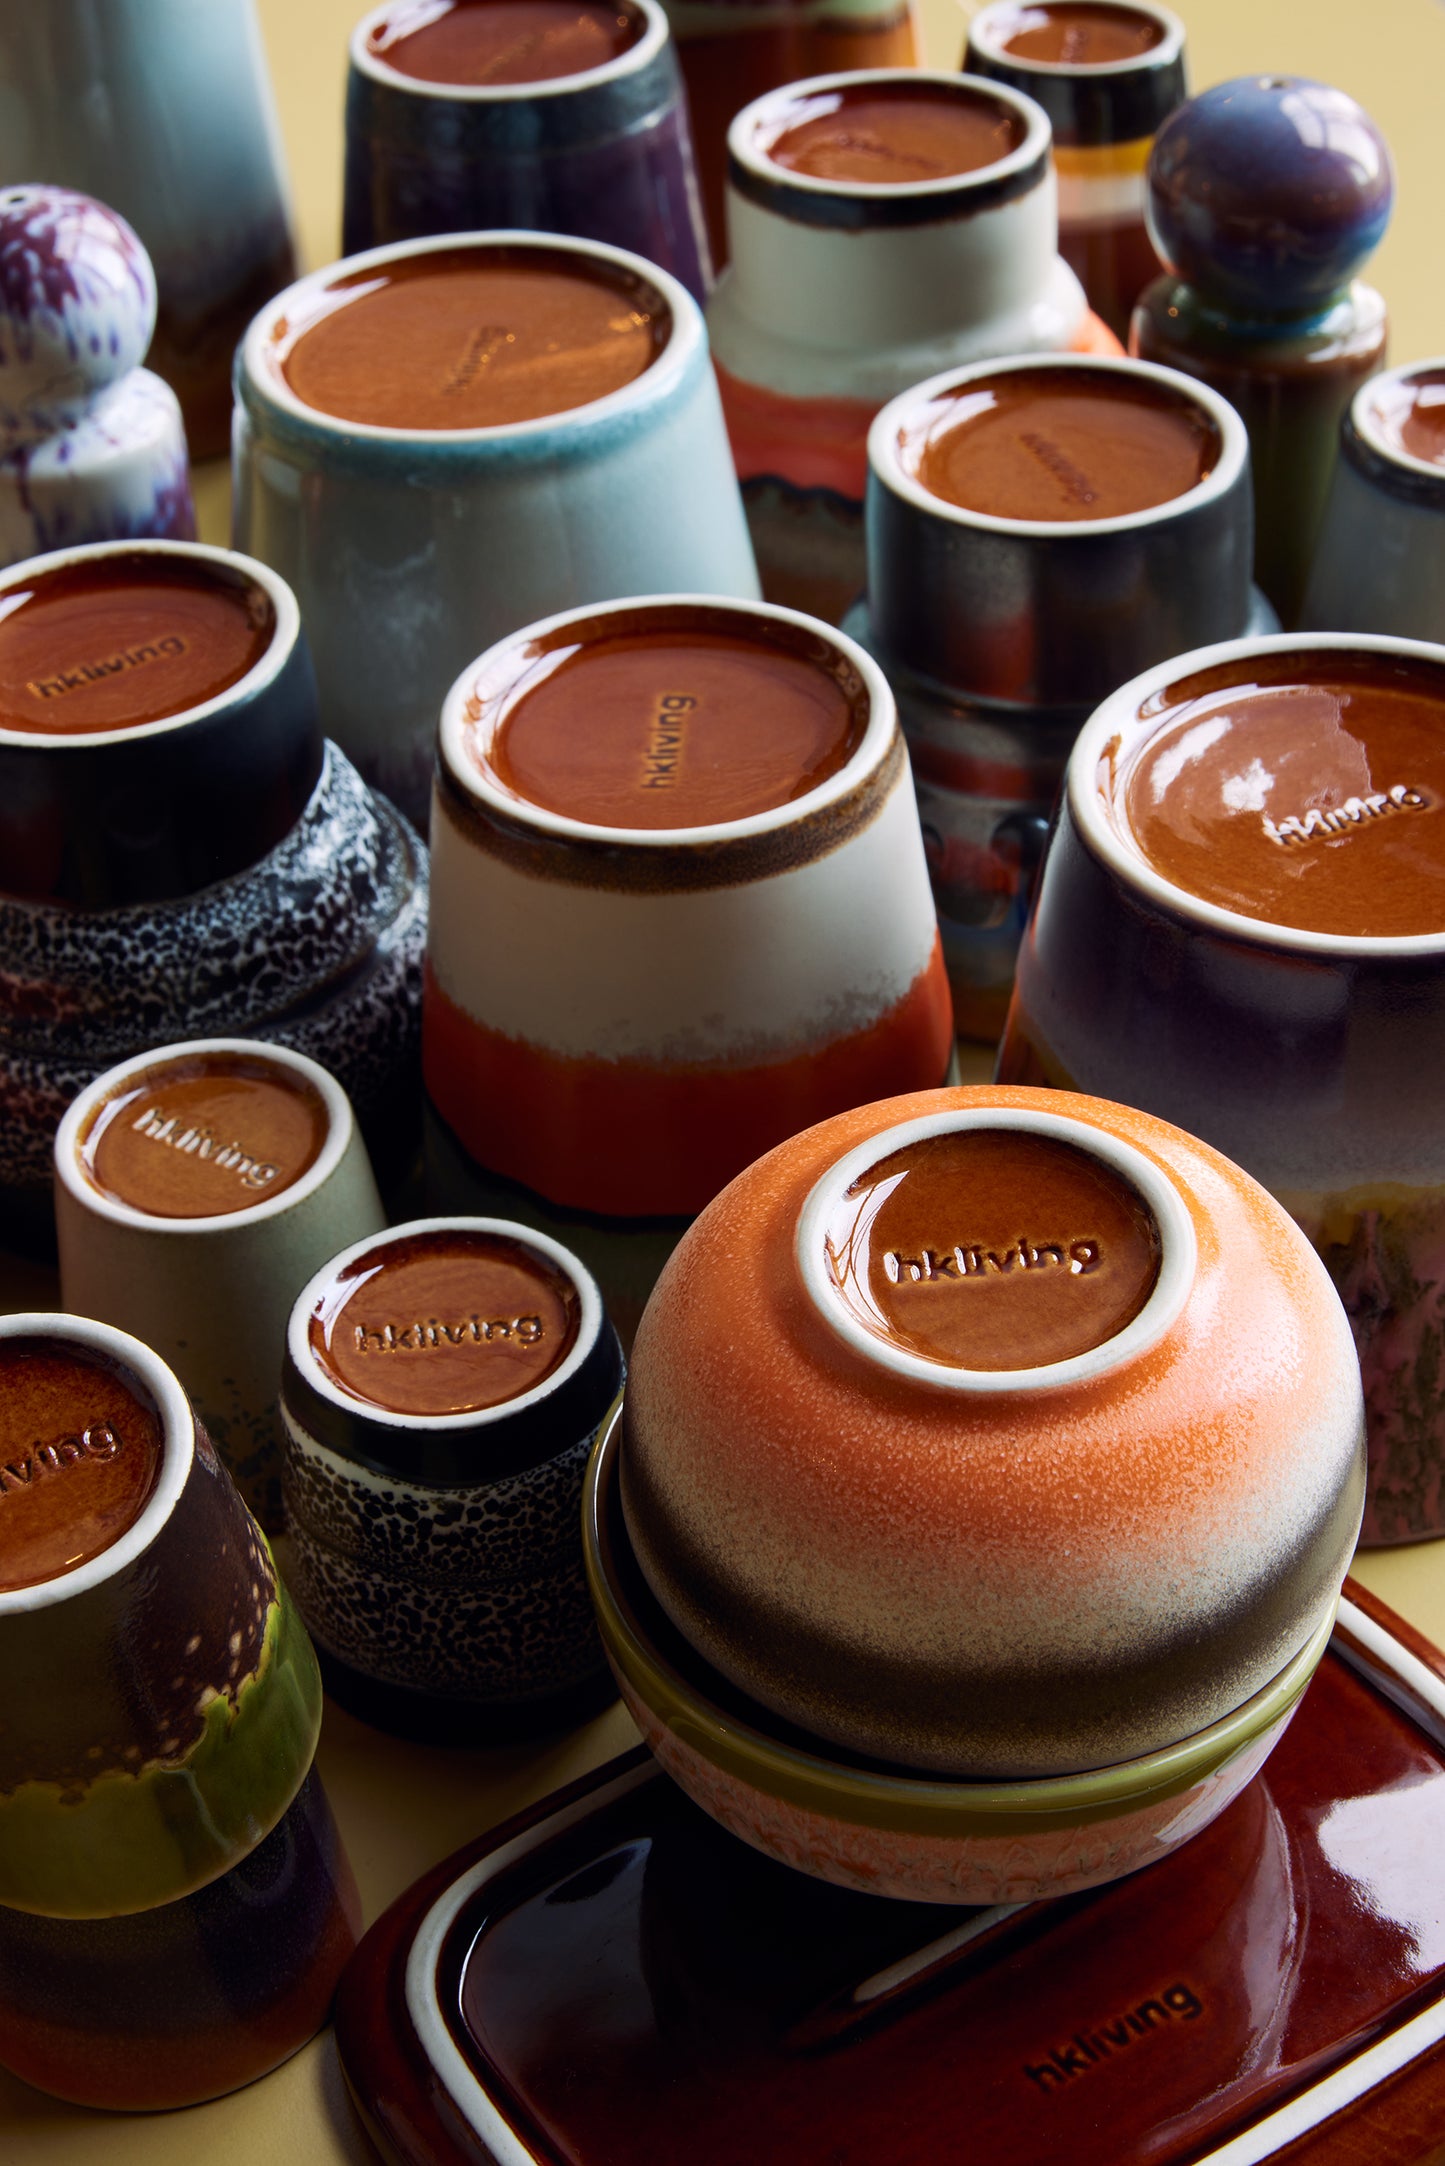 HKliving 70's Ceramics Verve Cappucino mugs (set of 4)